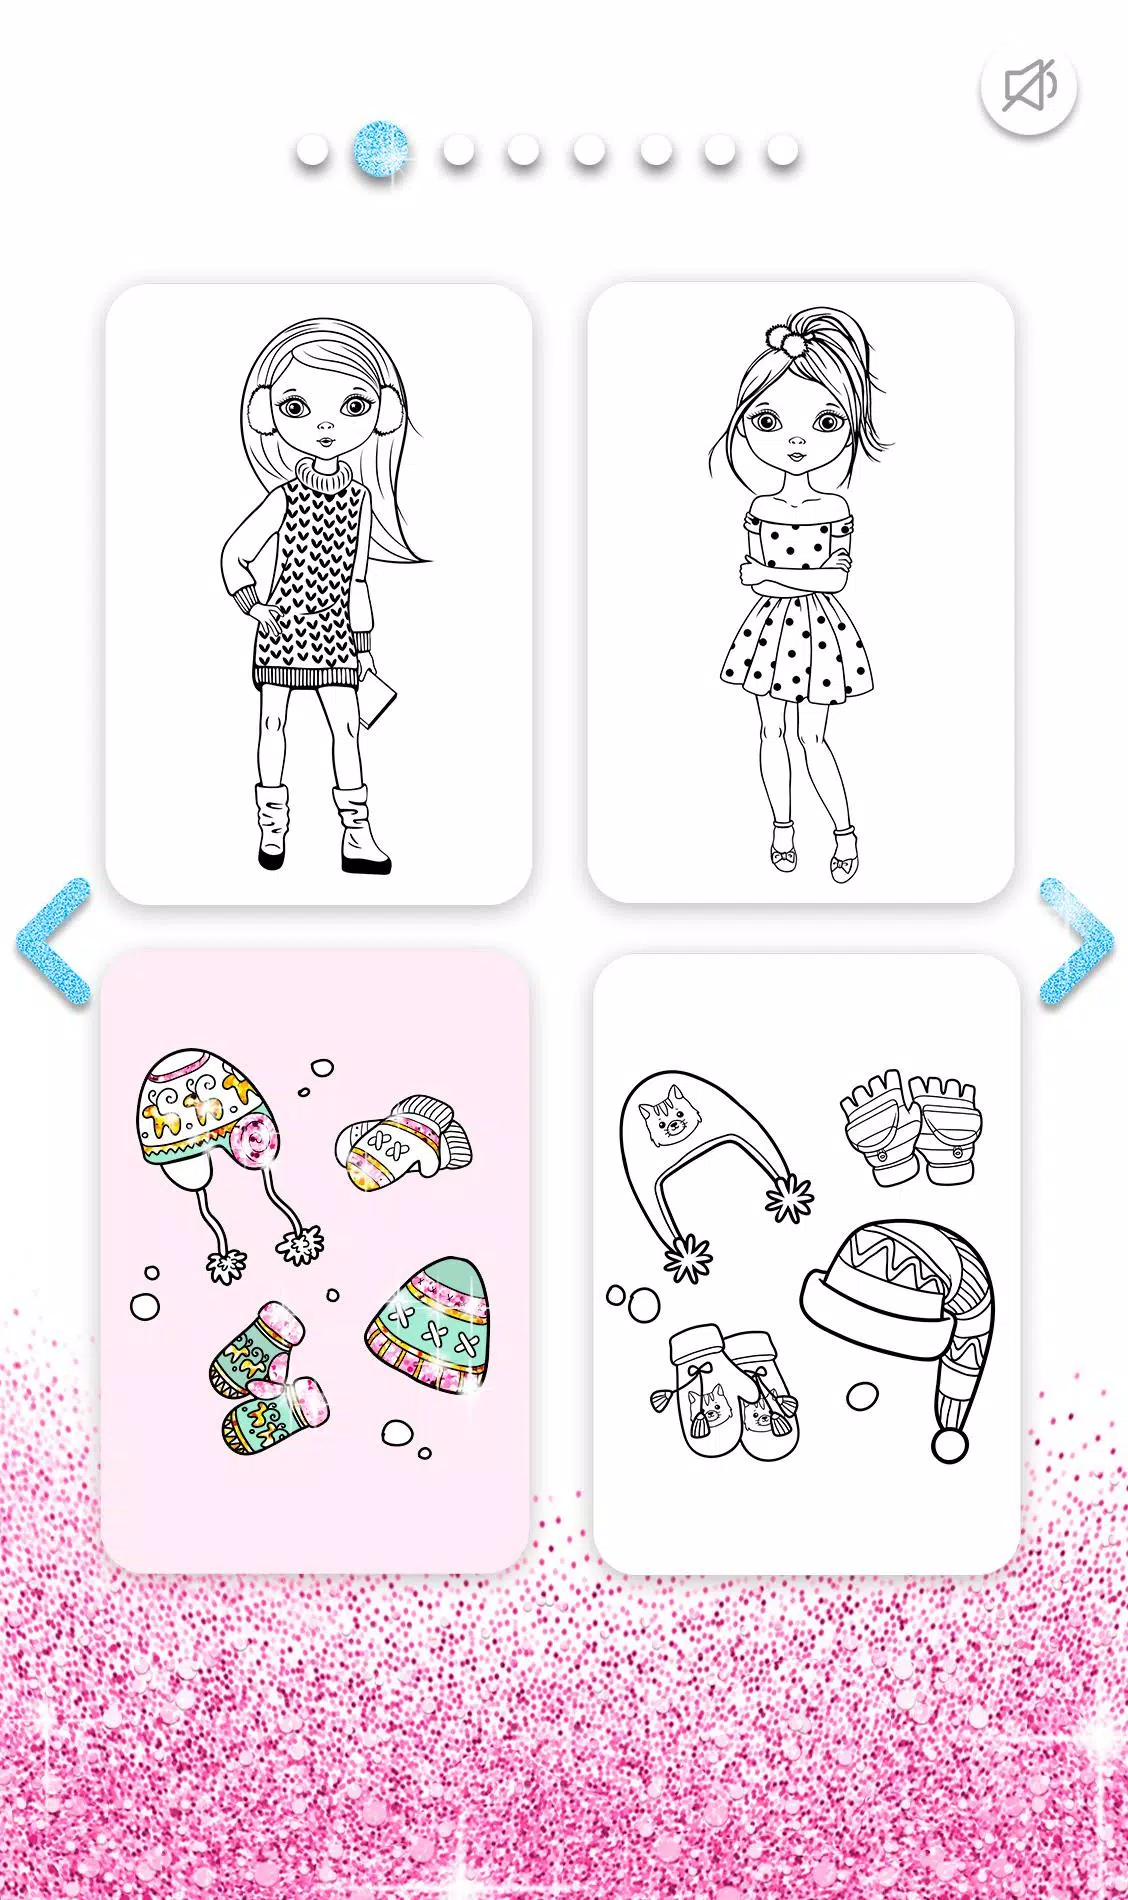 Download do APK de Princesa Para Colorir Glitter para Android